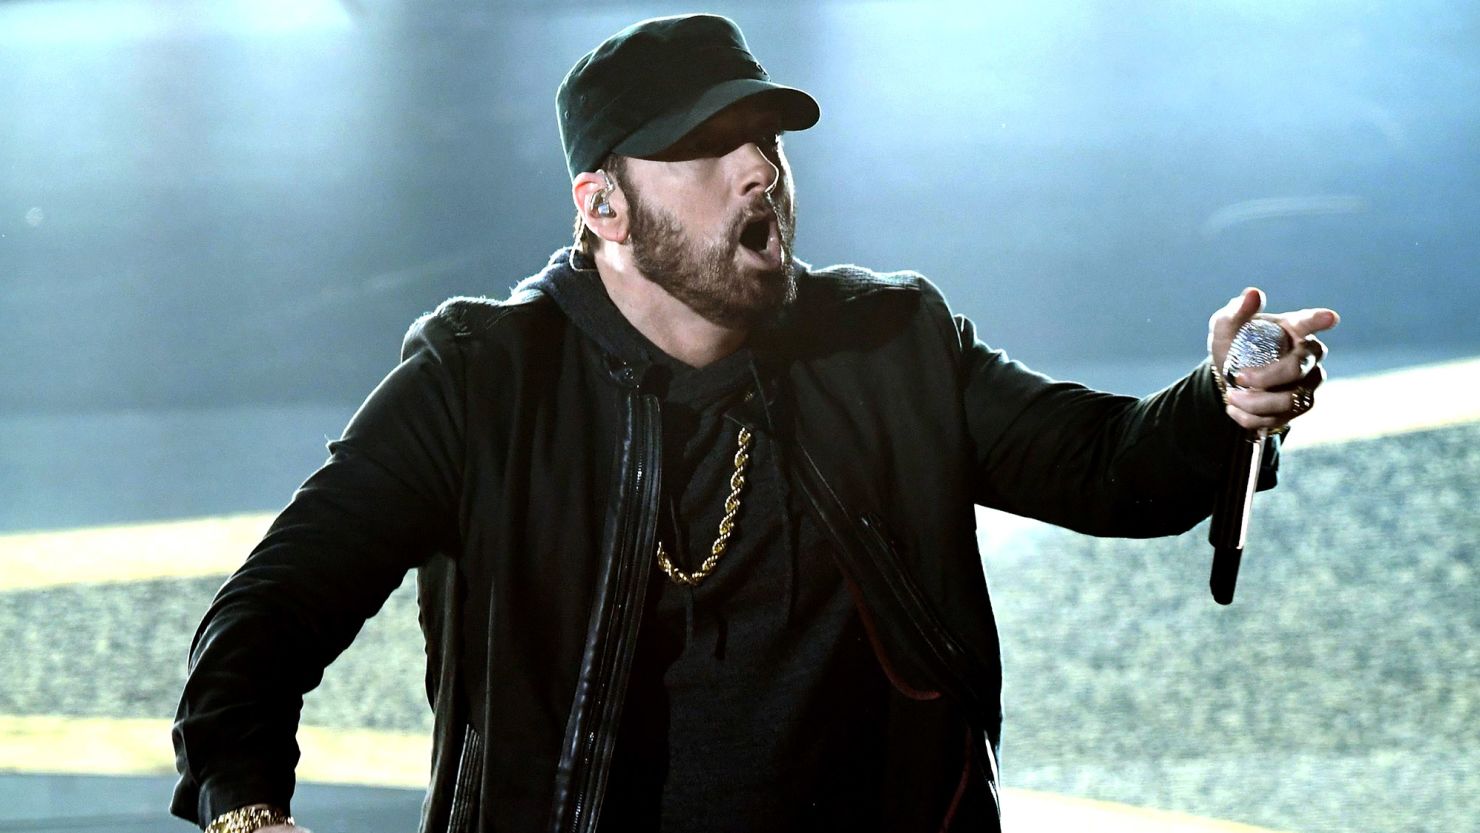 Eminem wearing a black jacket nad cap while holding a mic